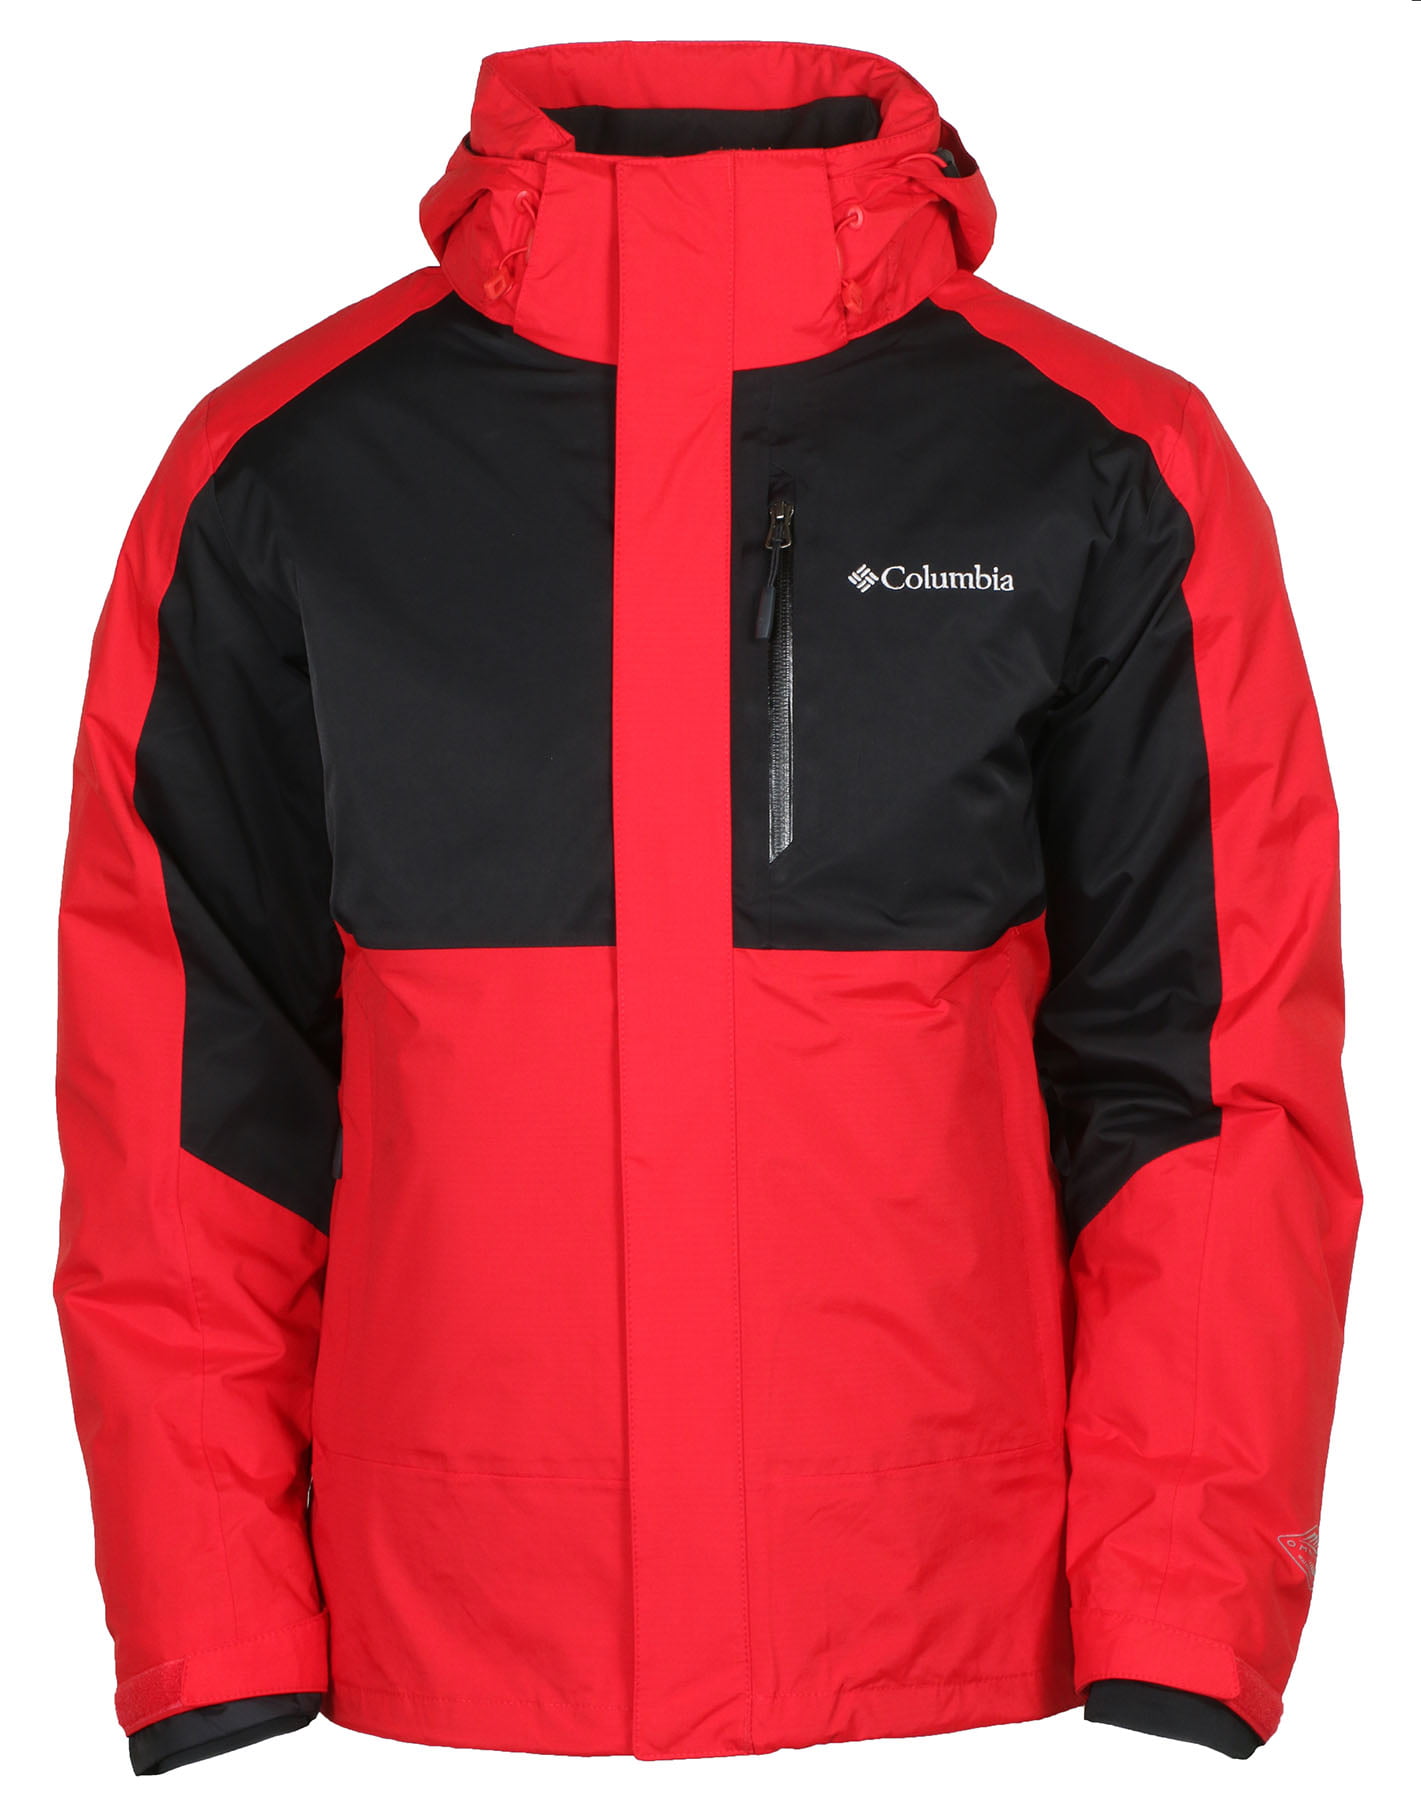 Hound Cornwall ejendom Columbia Men's Rural Mountain II Interchange Jacket (Red/Black, Large) -  Walmart.com